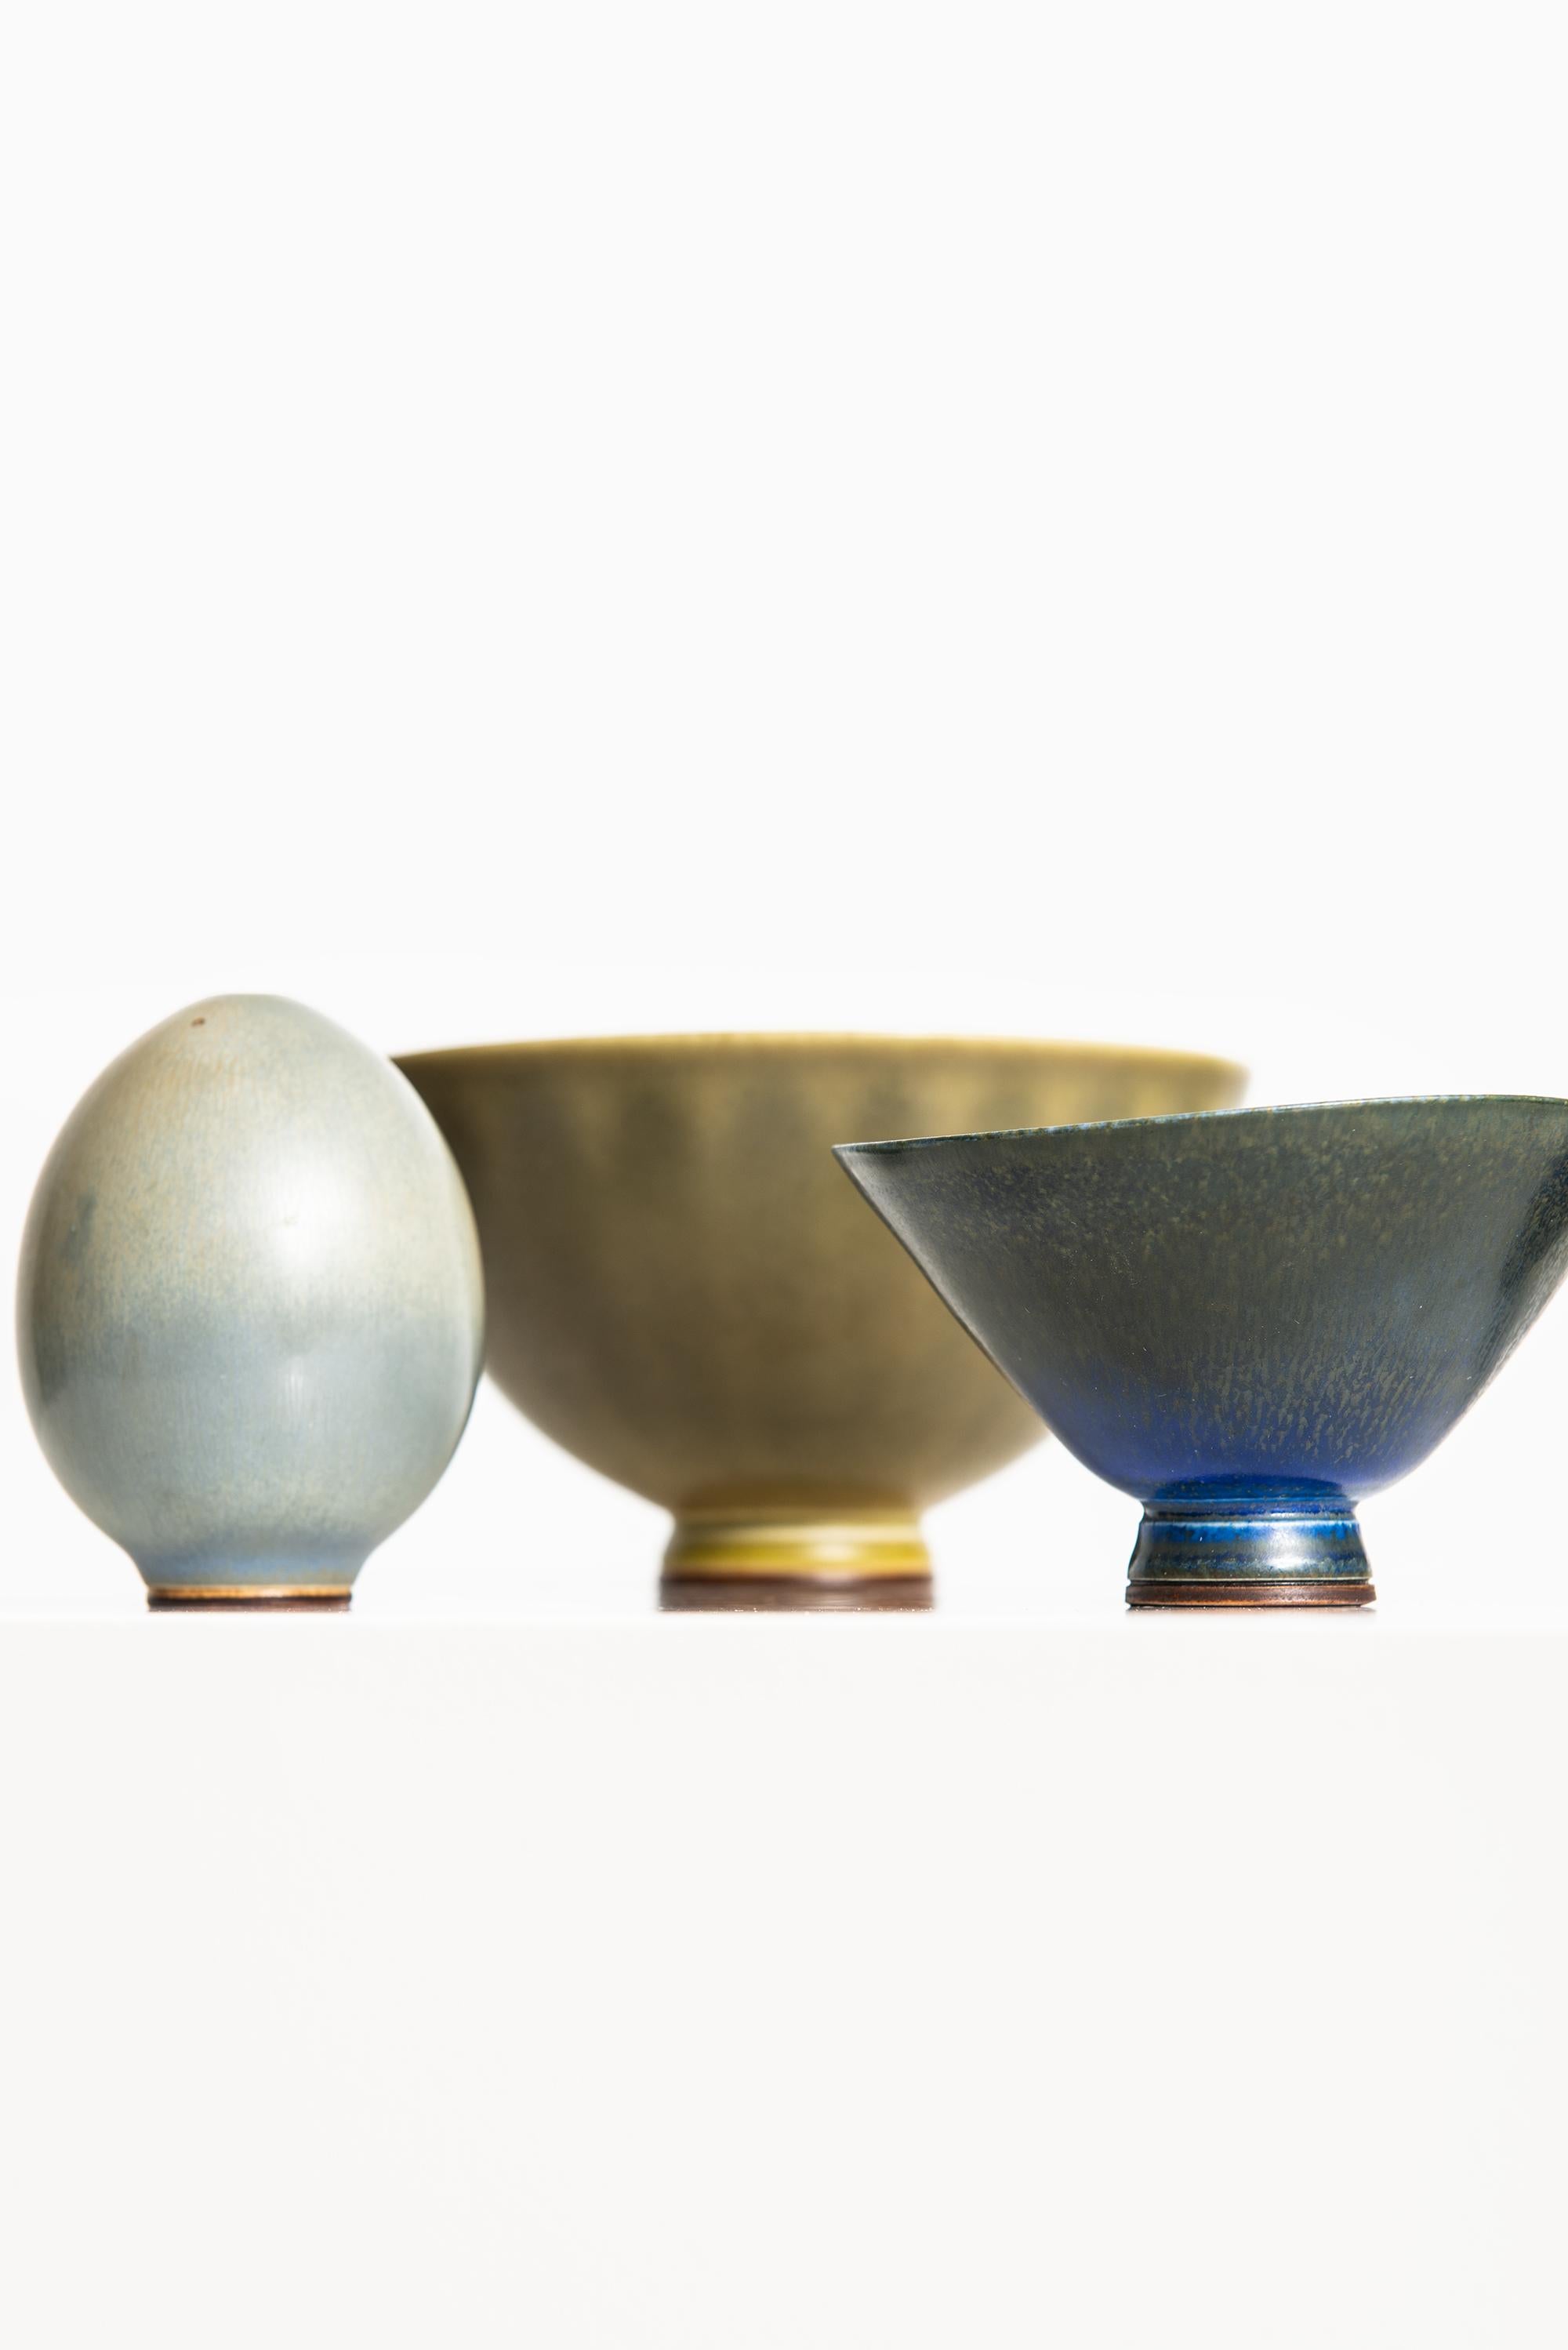 Rare set of 5 small ceramic vases designed by Berndt Friberg. Produced by Gustavsberg in Sweden.